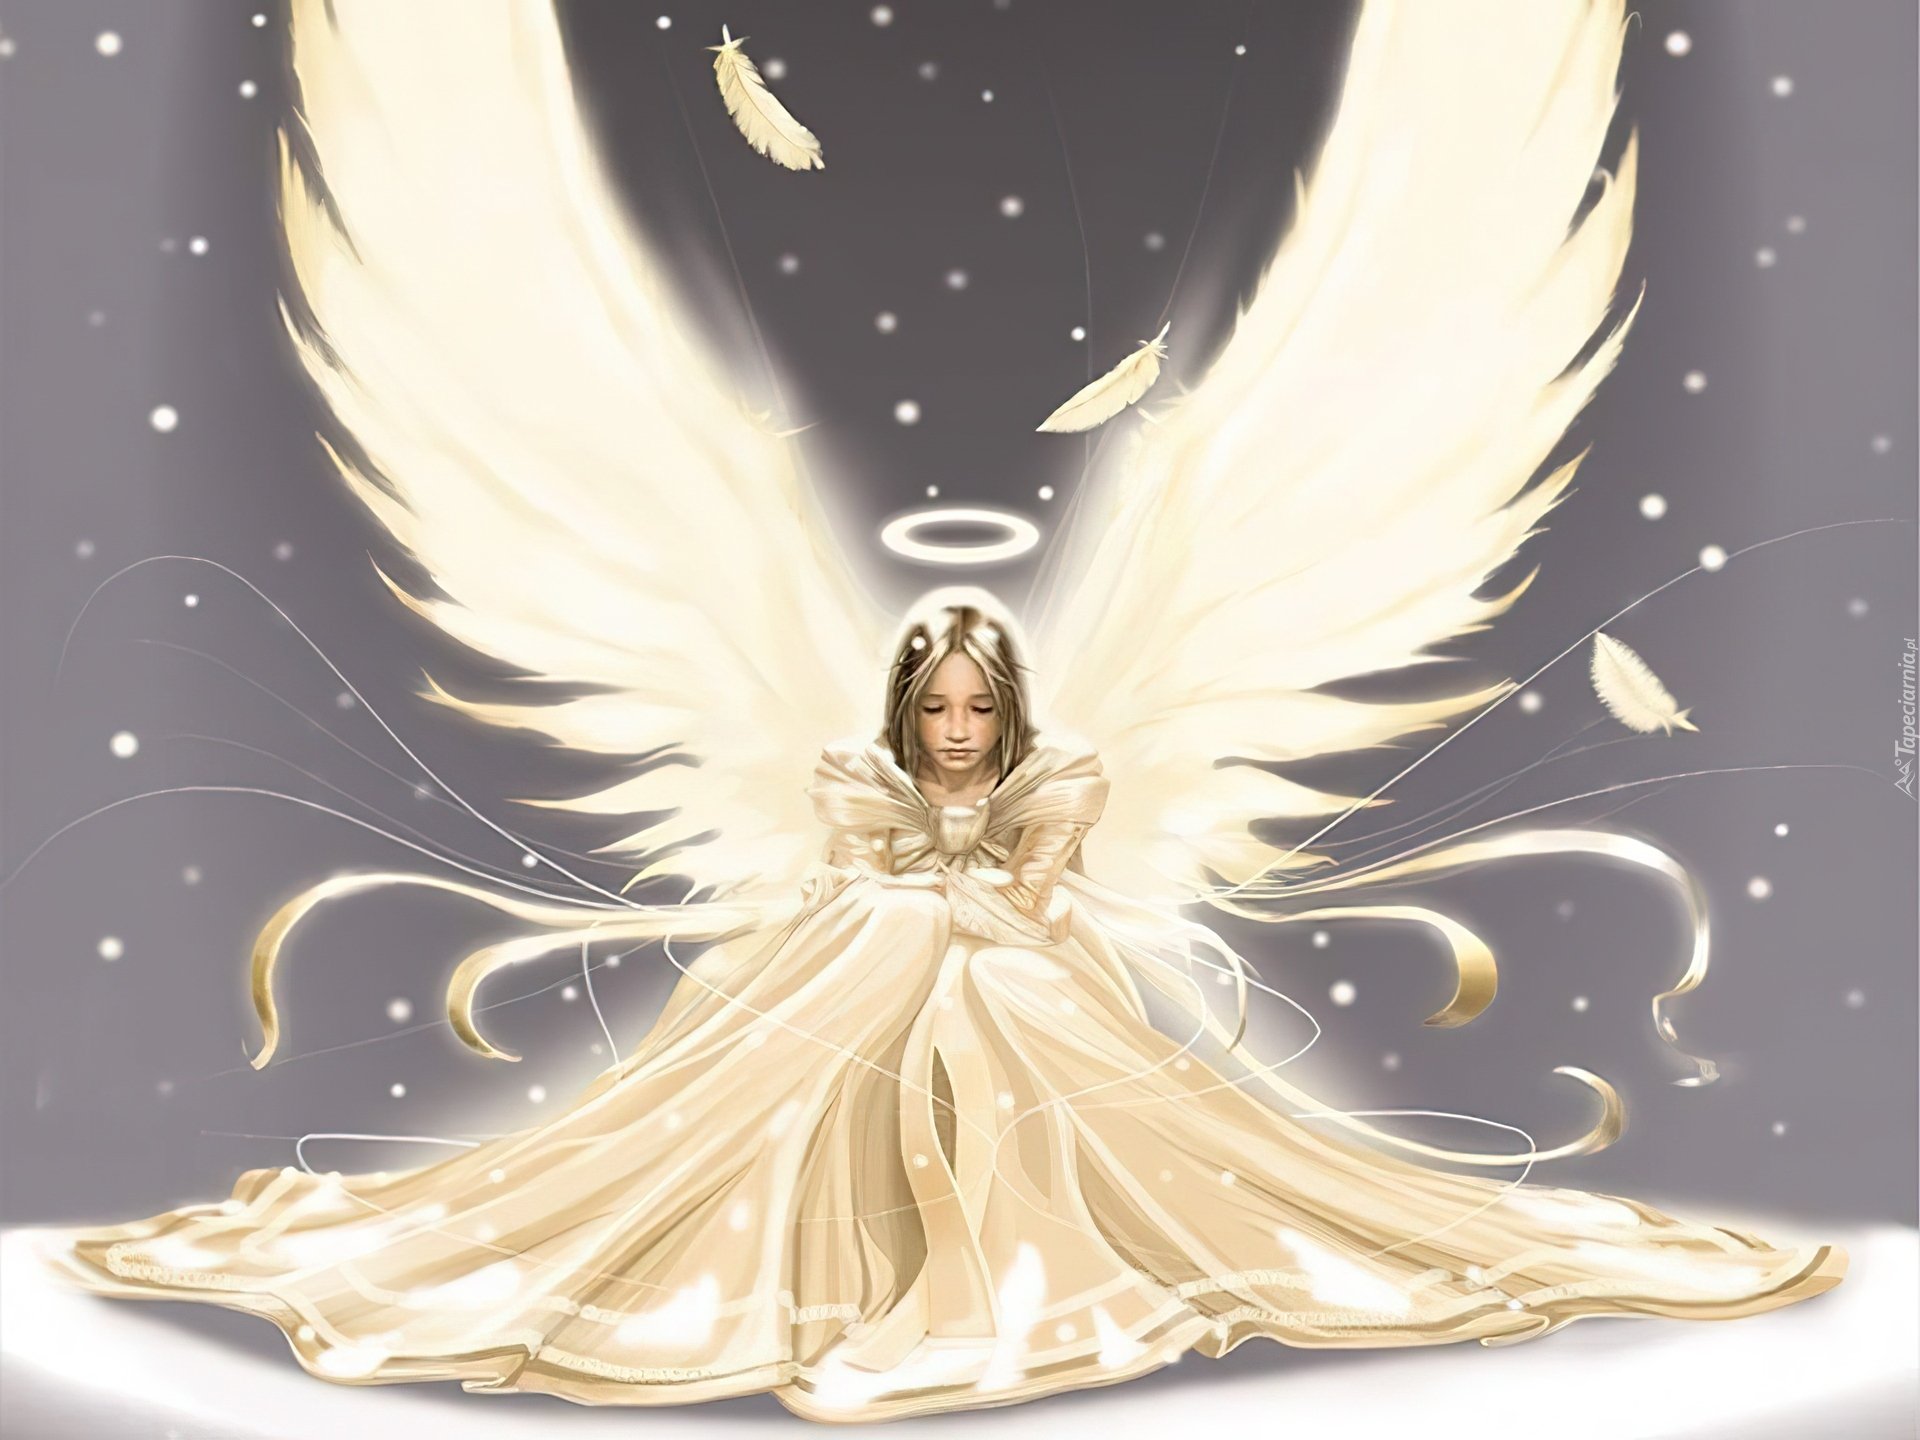 En angel